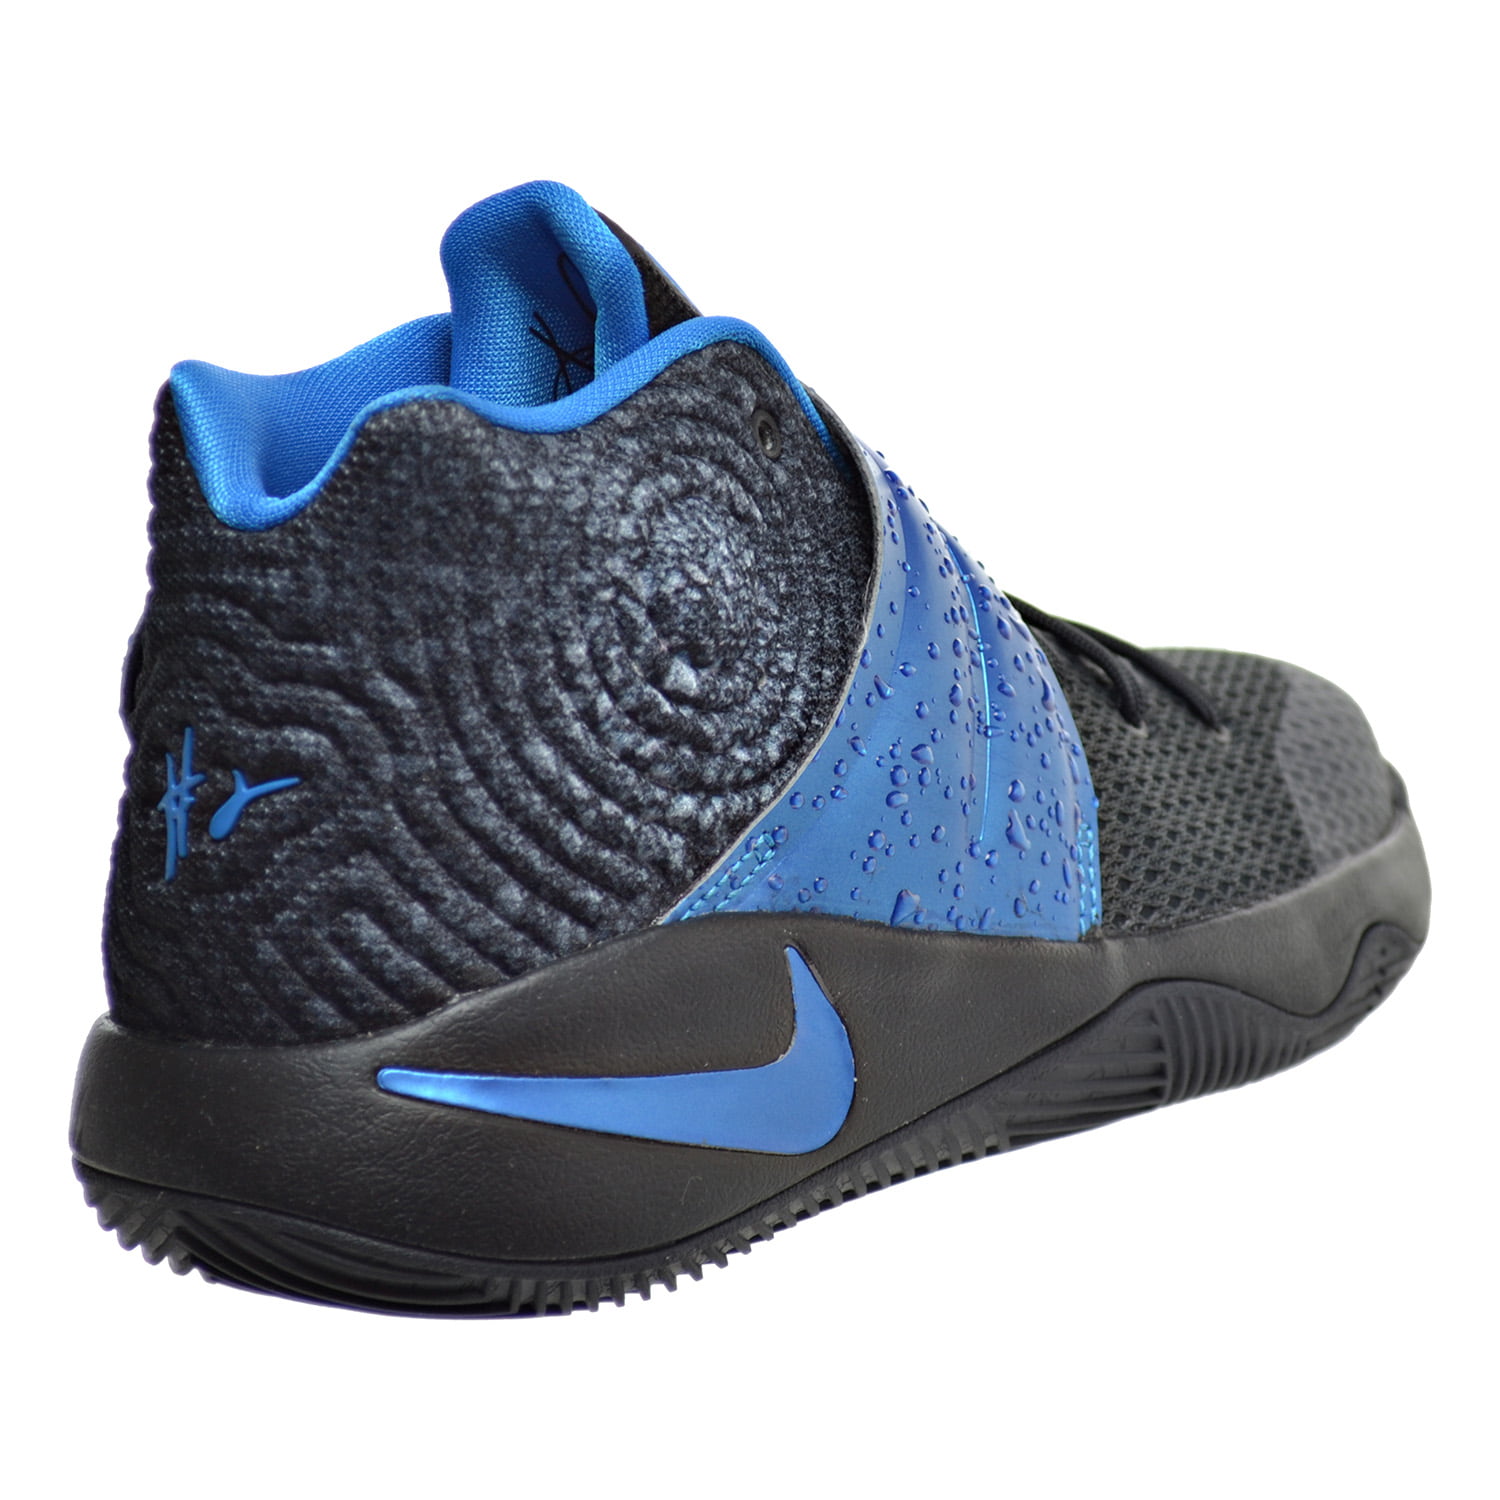 Kyrie 2 'Wet' Big Kid's Shoes Black/Blue Glow/Anthracite 826673-005 - Walmart.com